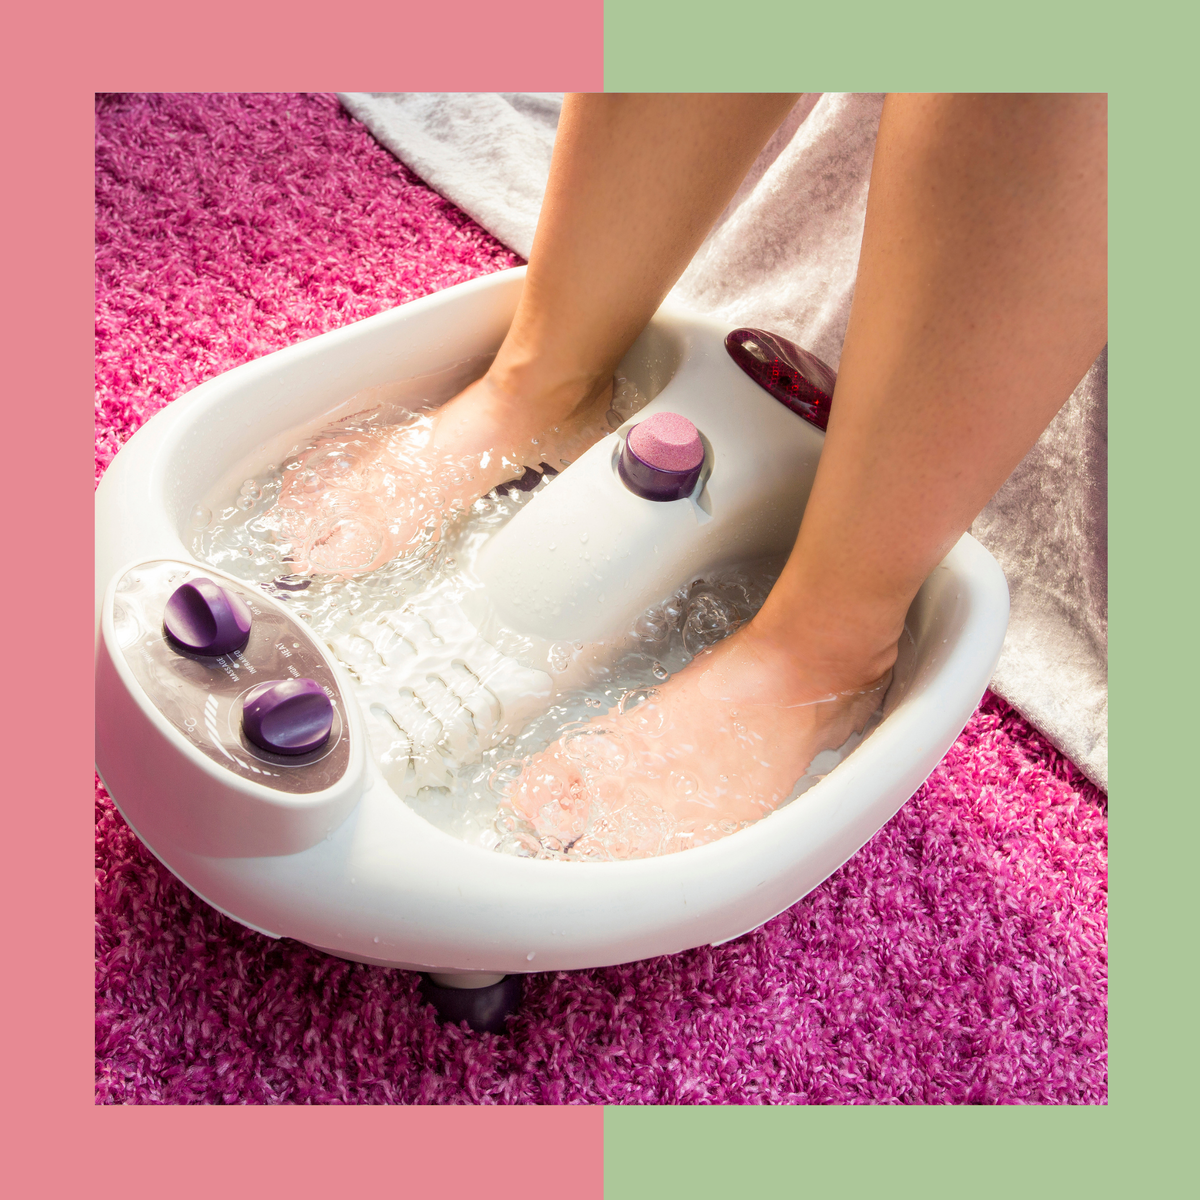 Массажер ванночка. Гидромассажная ванночка Nozomi MF-104. BABYLISS body benefits гидромассажная ванночка. Педикюрная ванна для ног. Ванночка для ног спа.